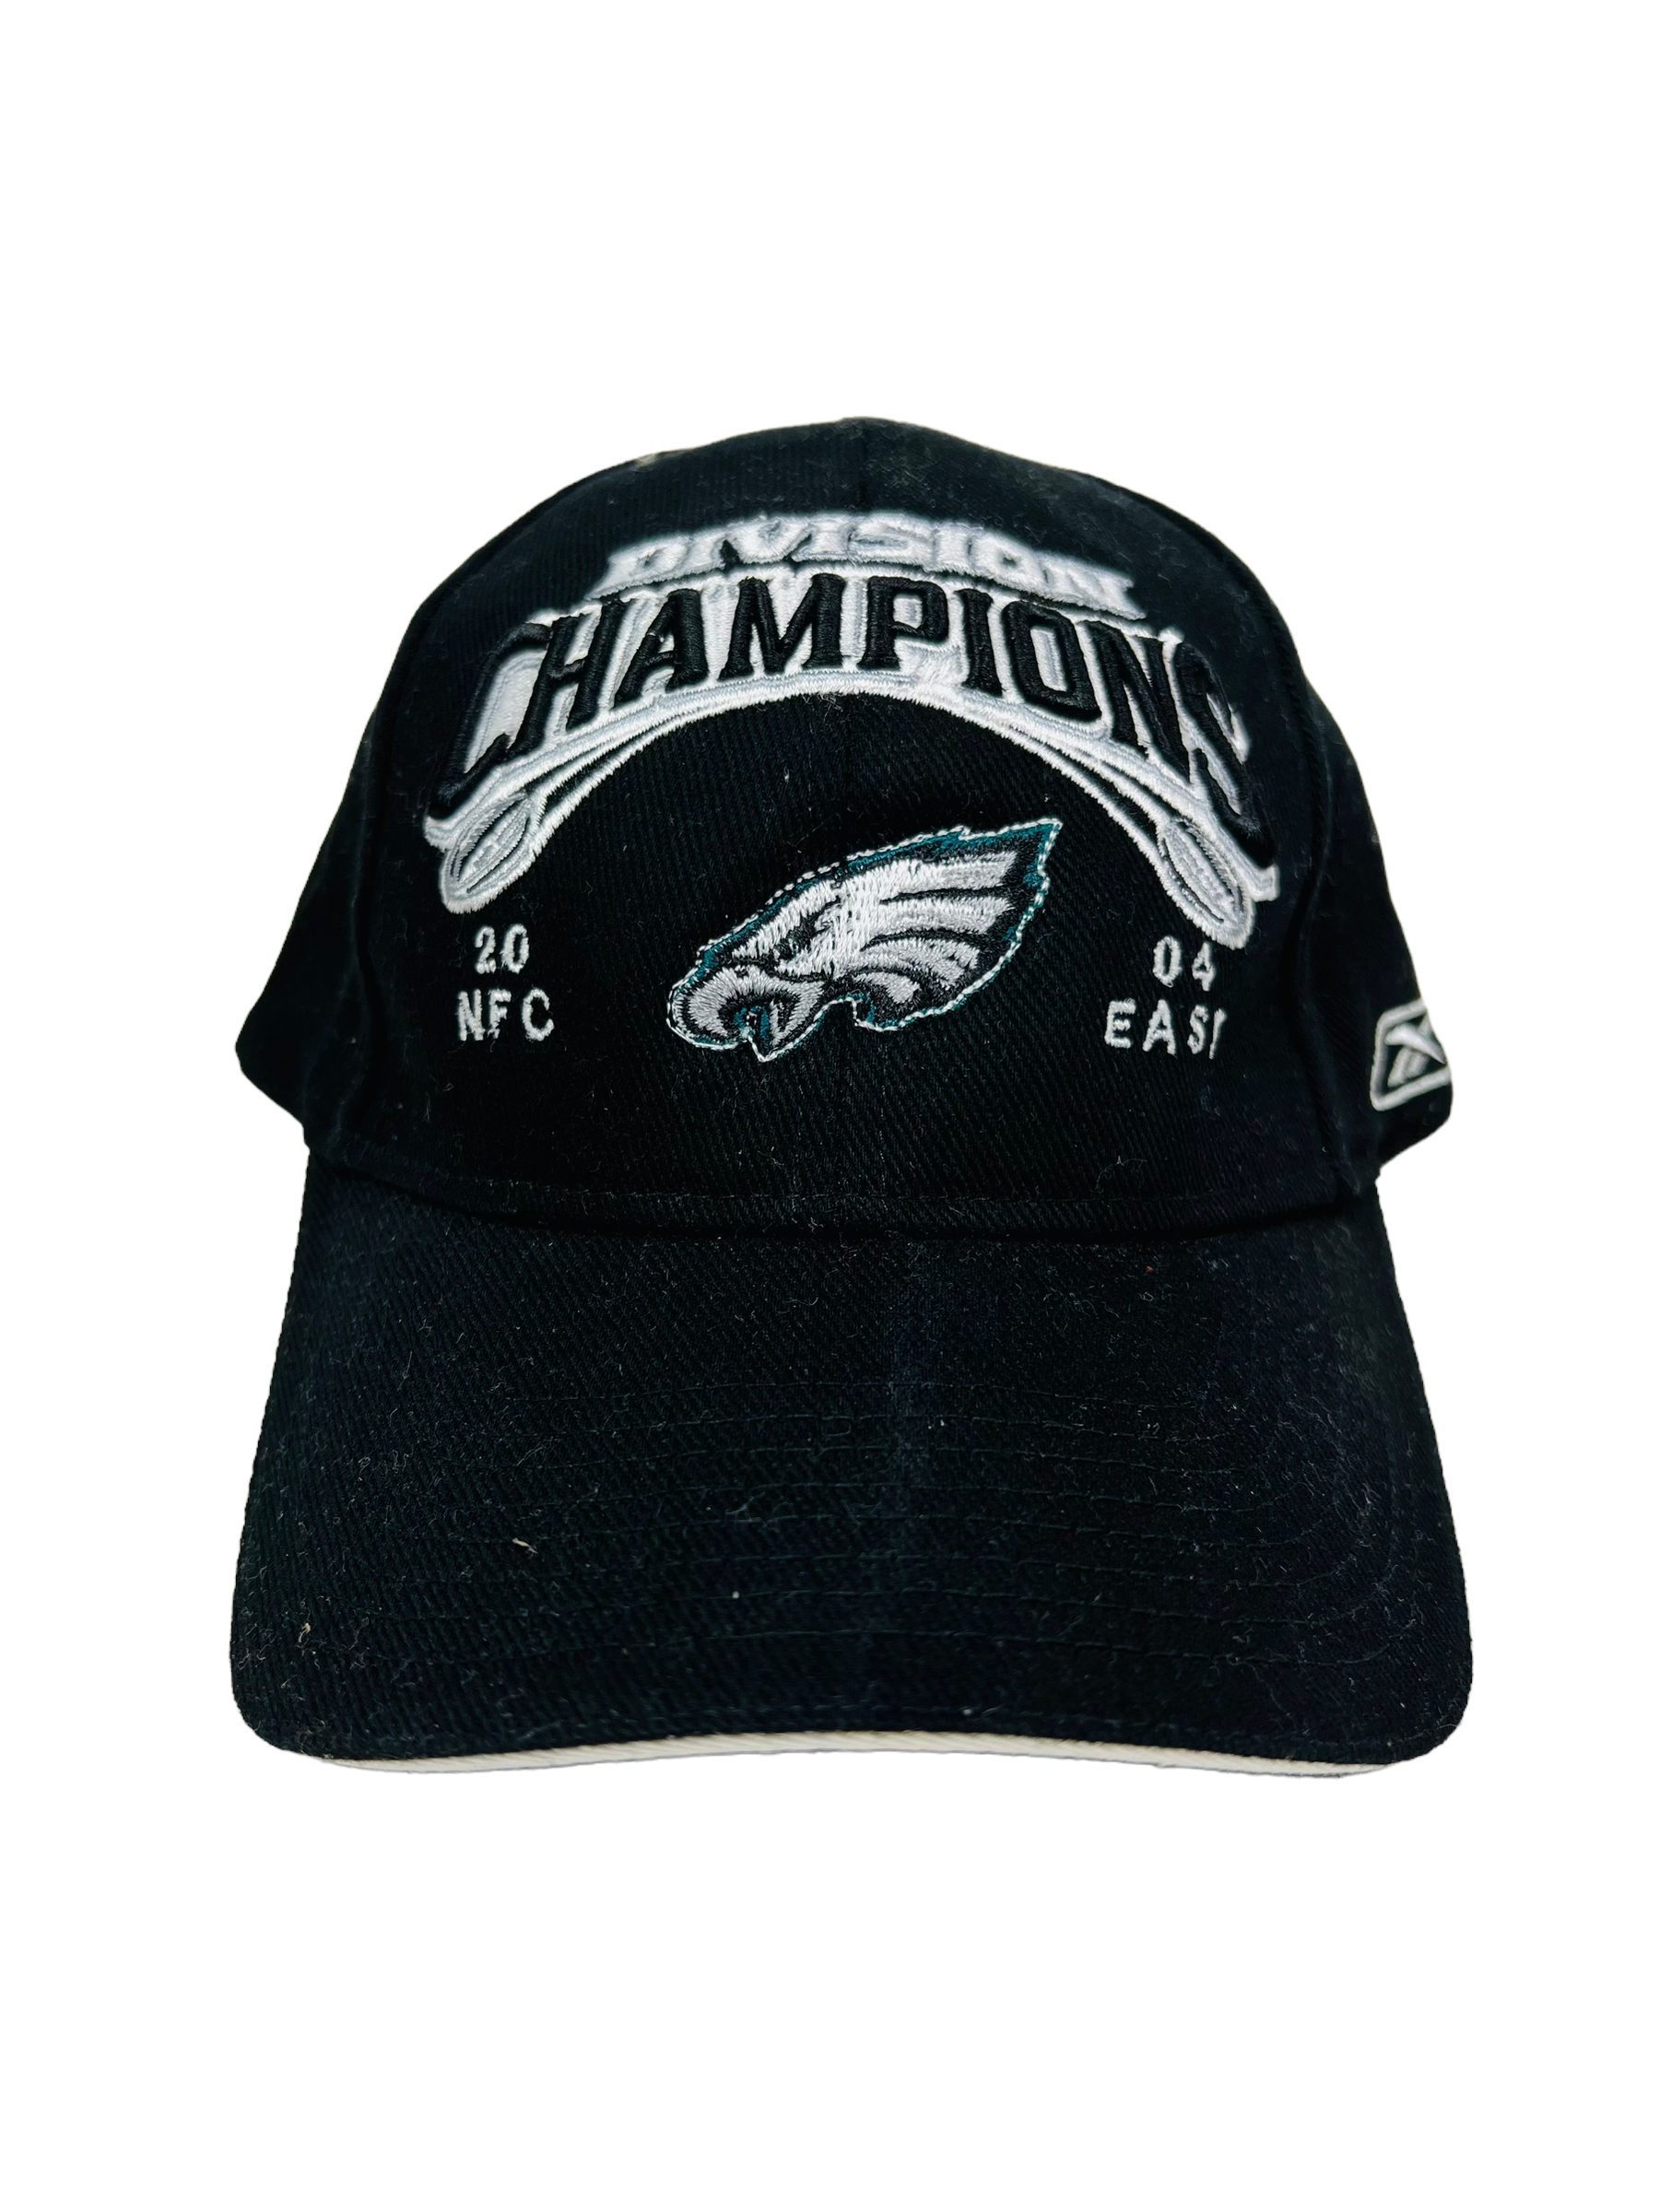 east champions hat